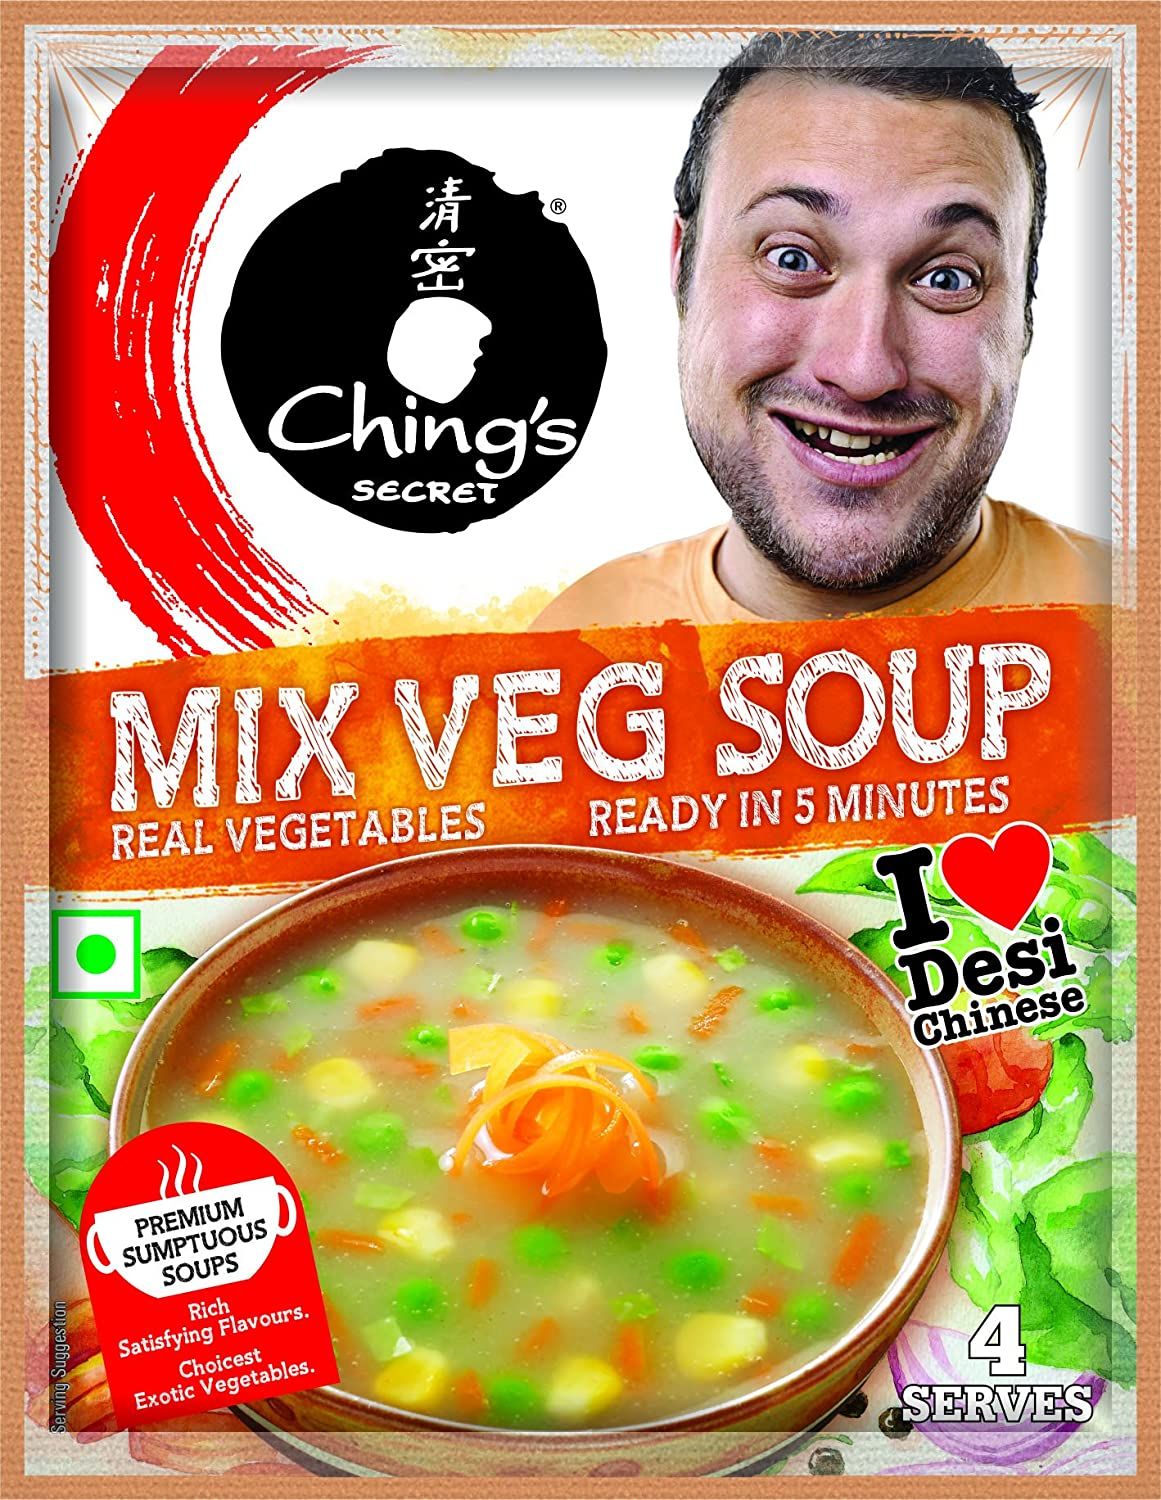 Ching's Secret Mix Veg Soup Image